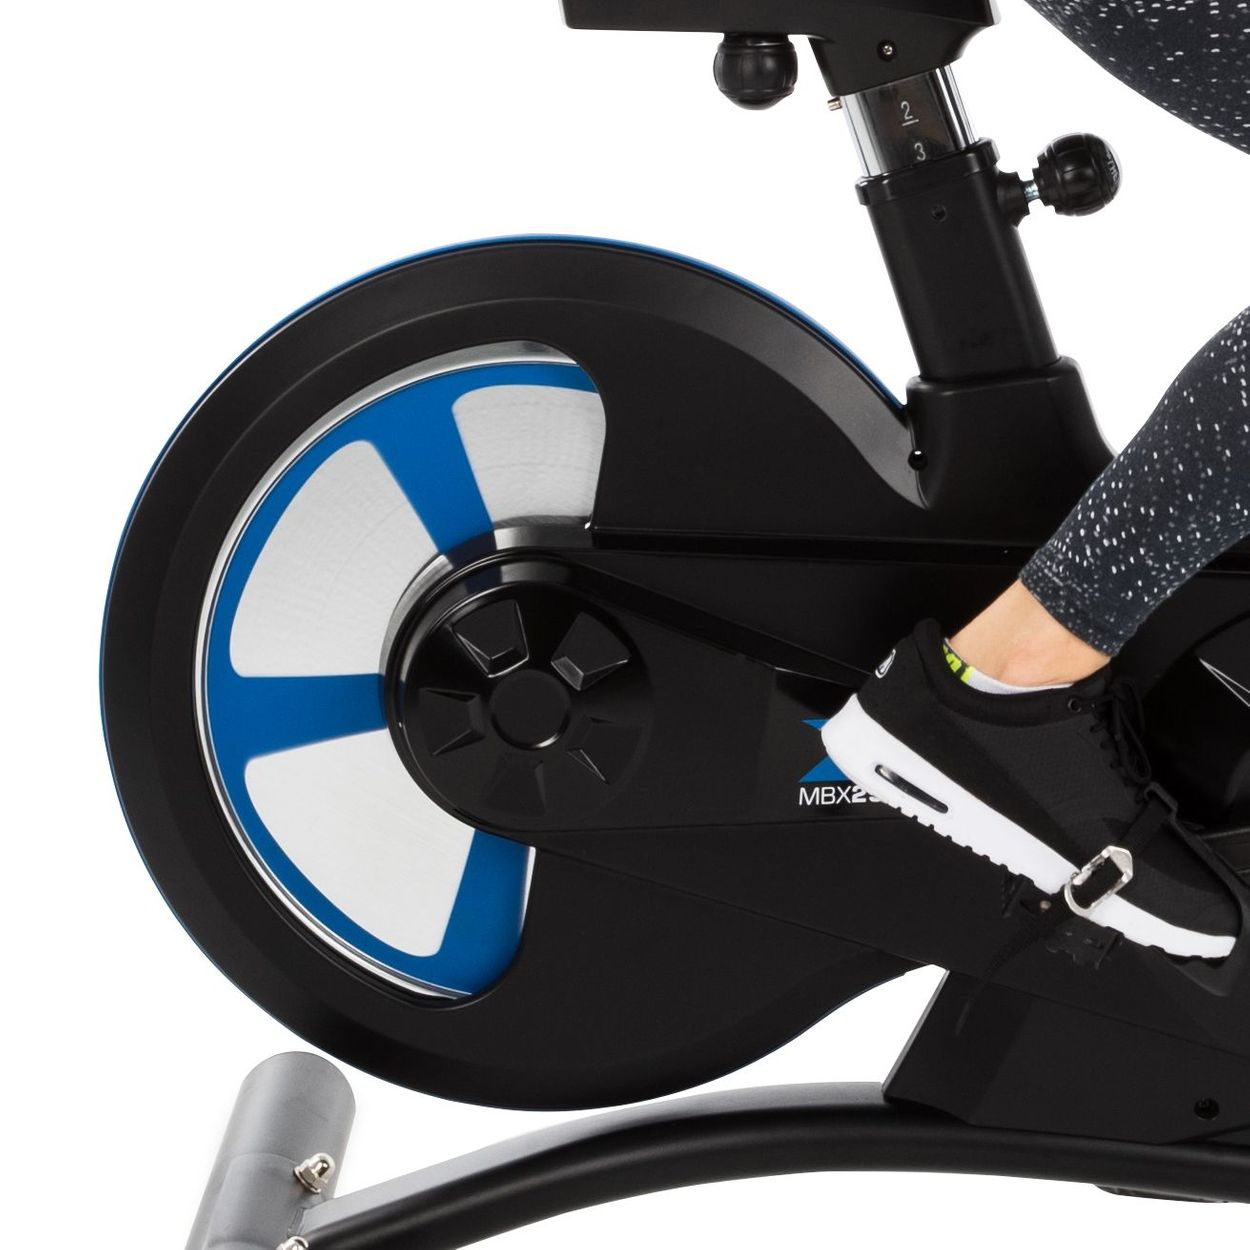 xterra fitness mbx2500 indoor cycle